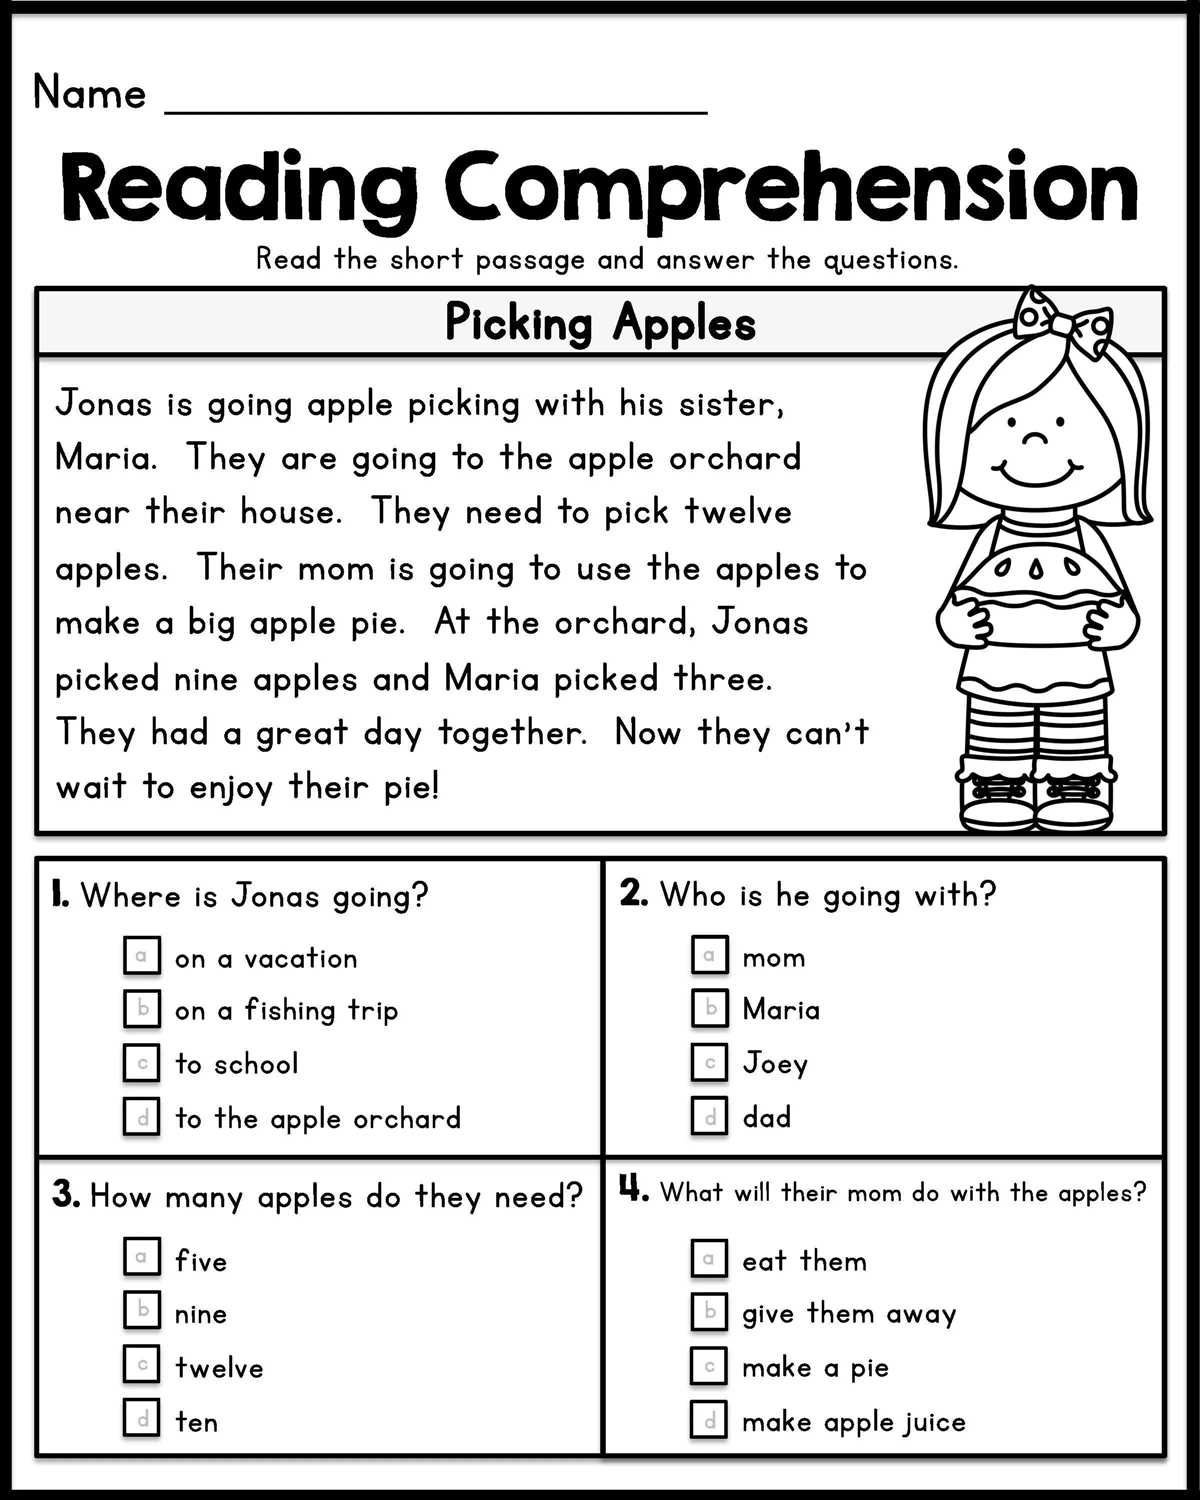 Tips for improving reading comprehension skills